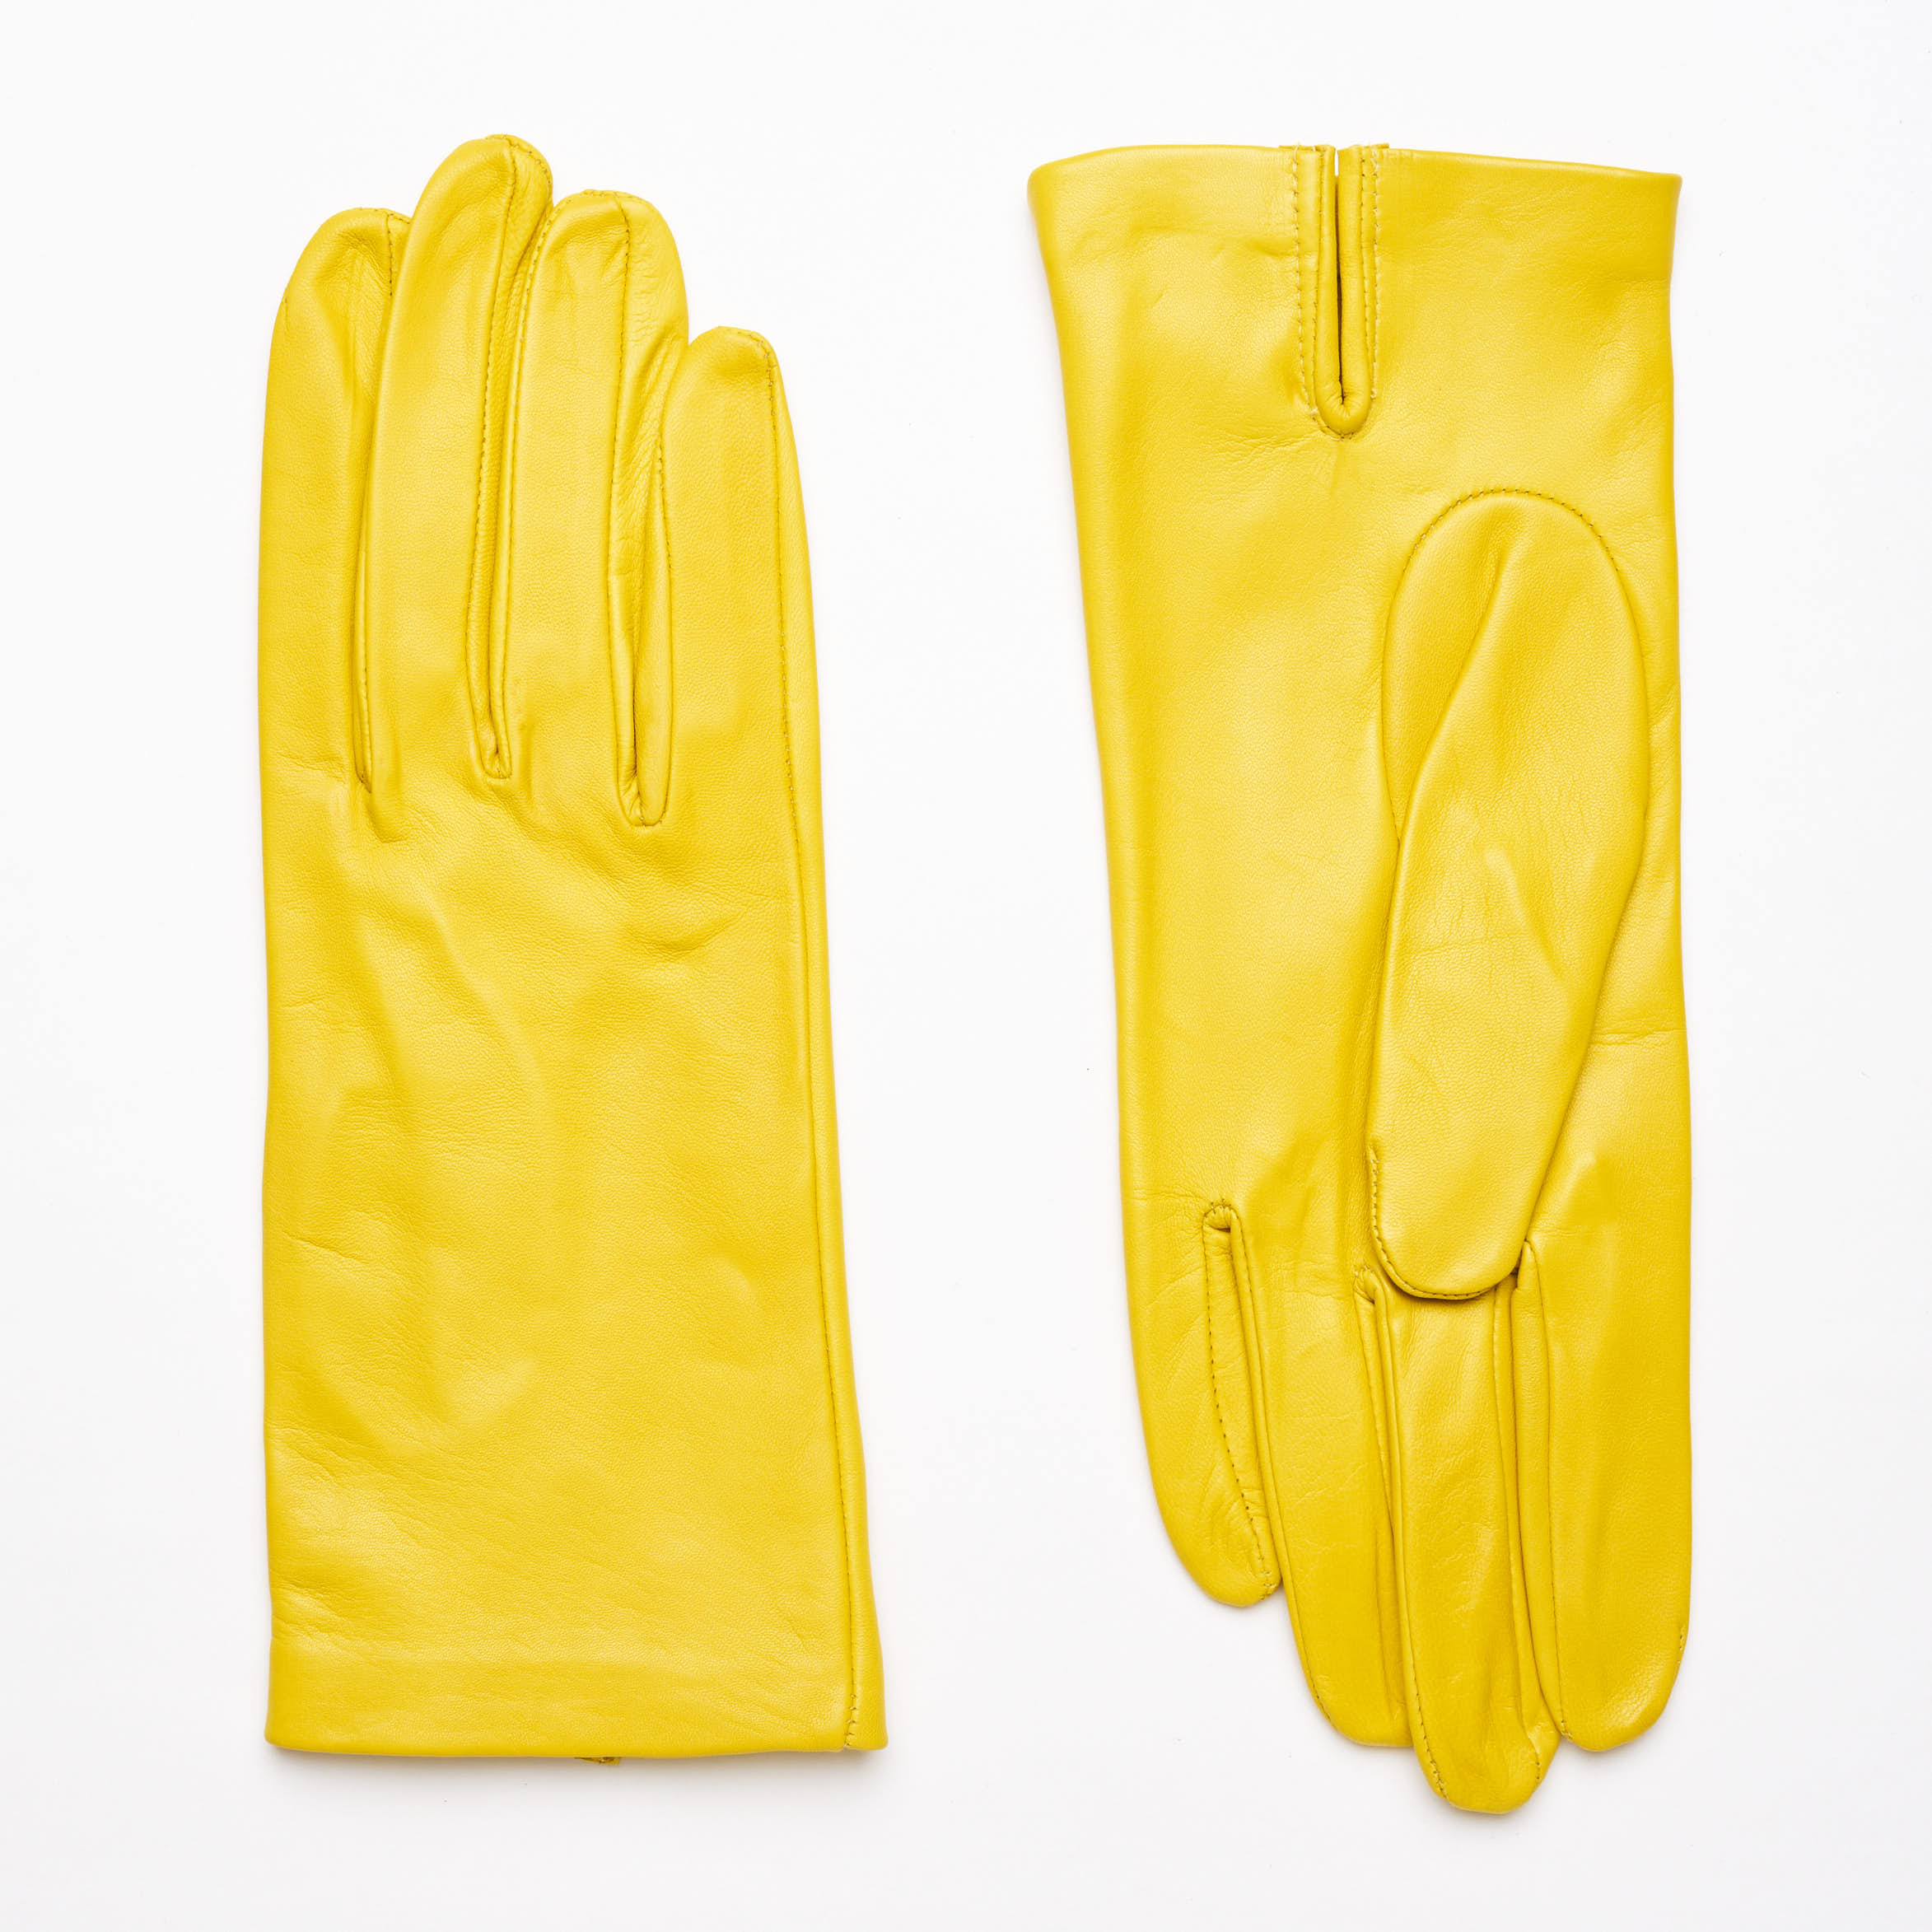 Gloves Valeria 1